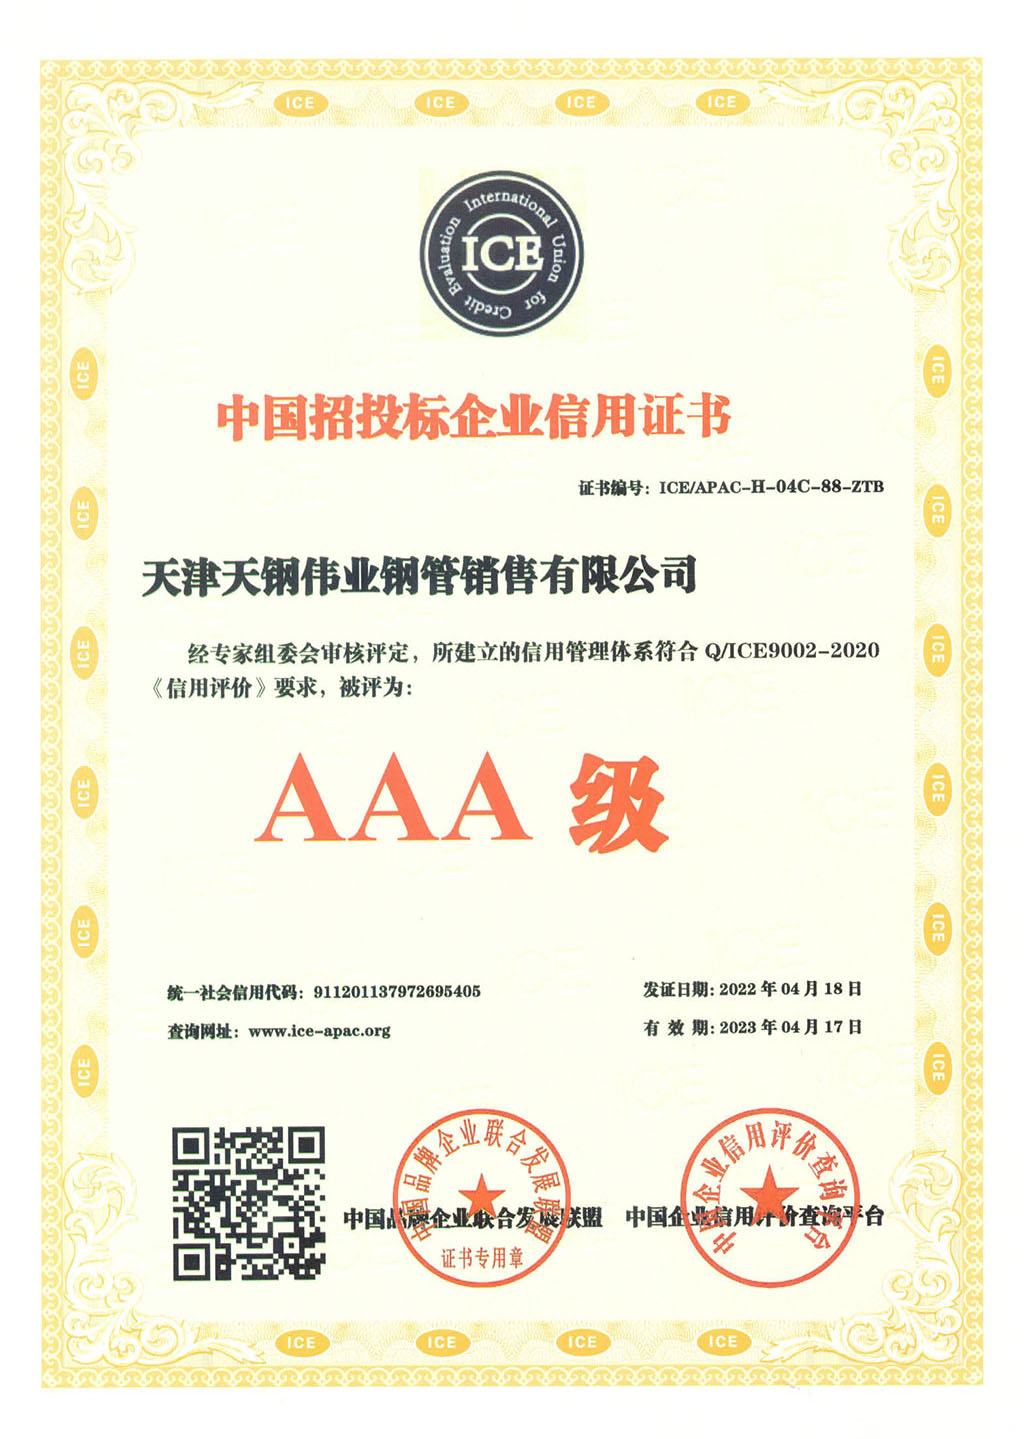 Credit Certificate of China Tendering and Bidding Enterprise